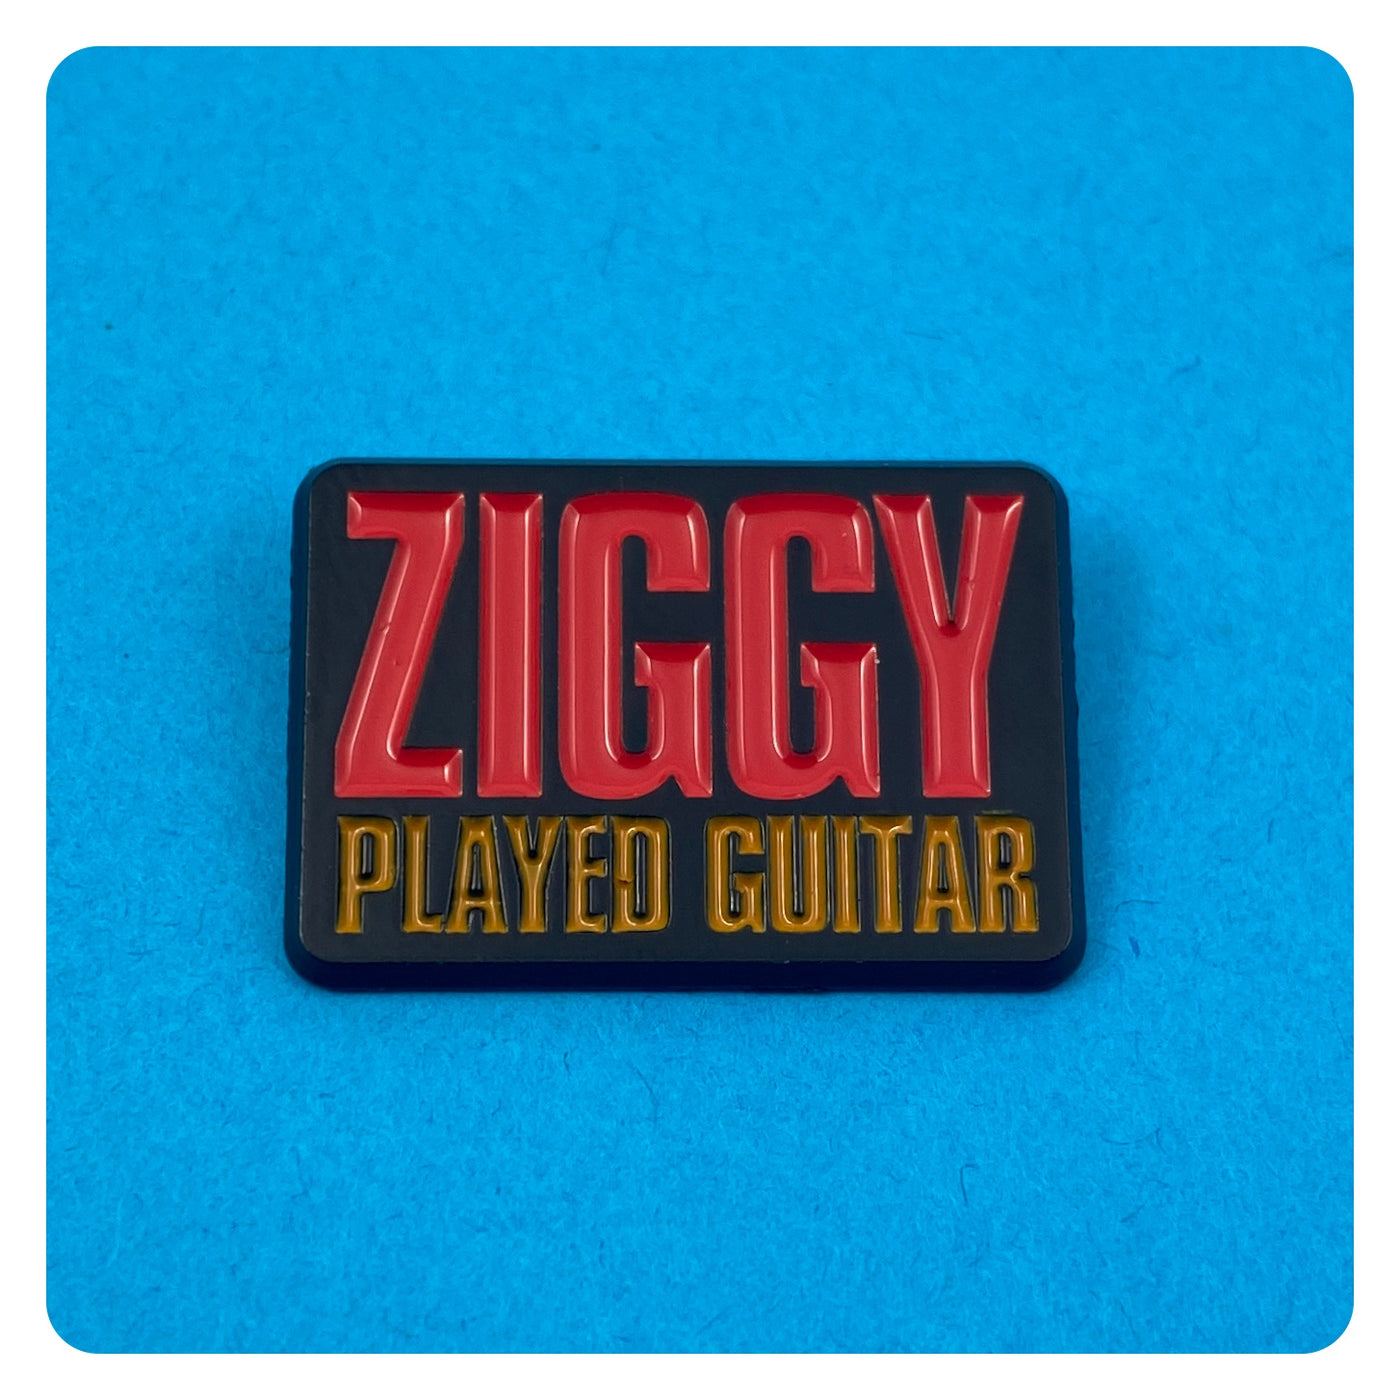 Ziggy Played Guitar Enamel Pin